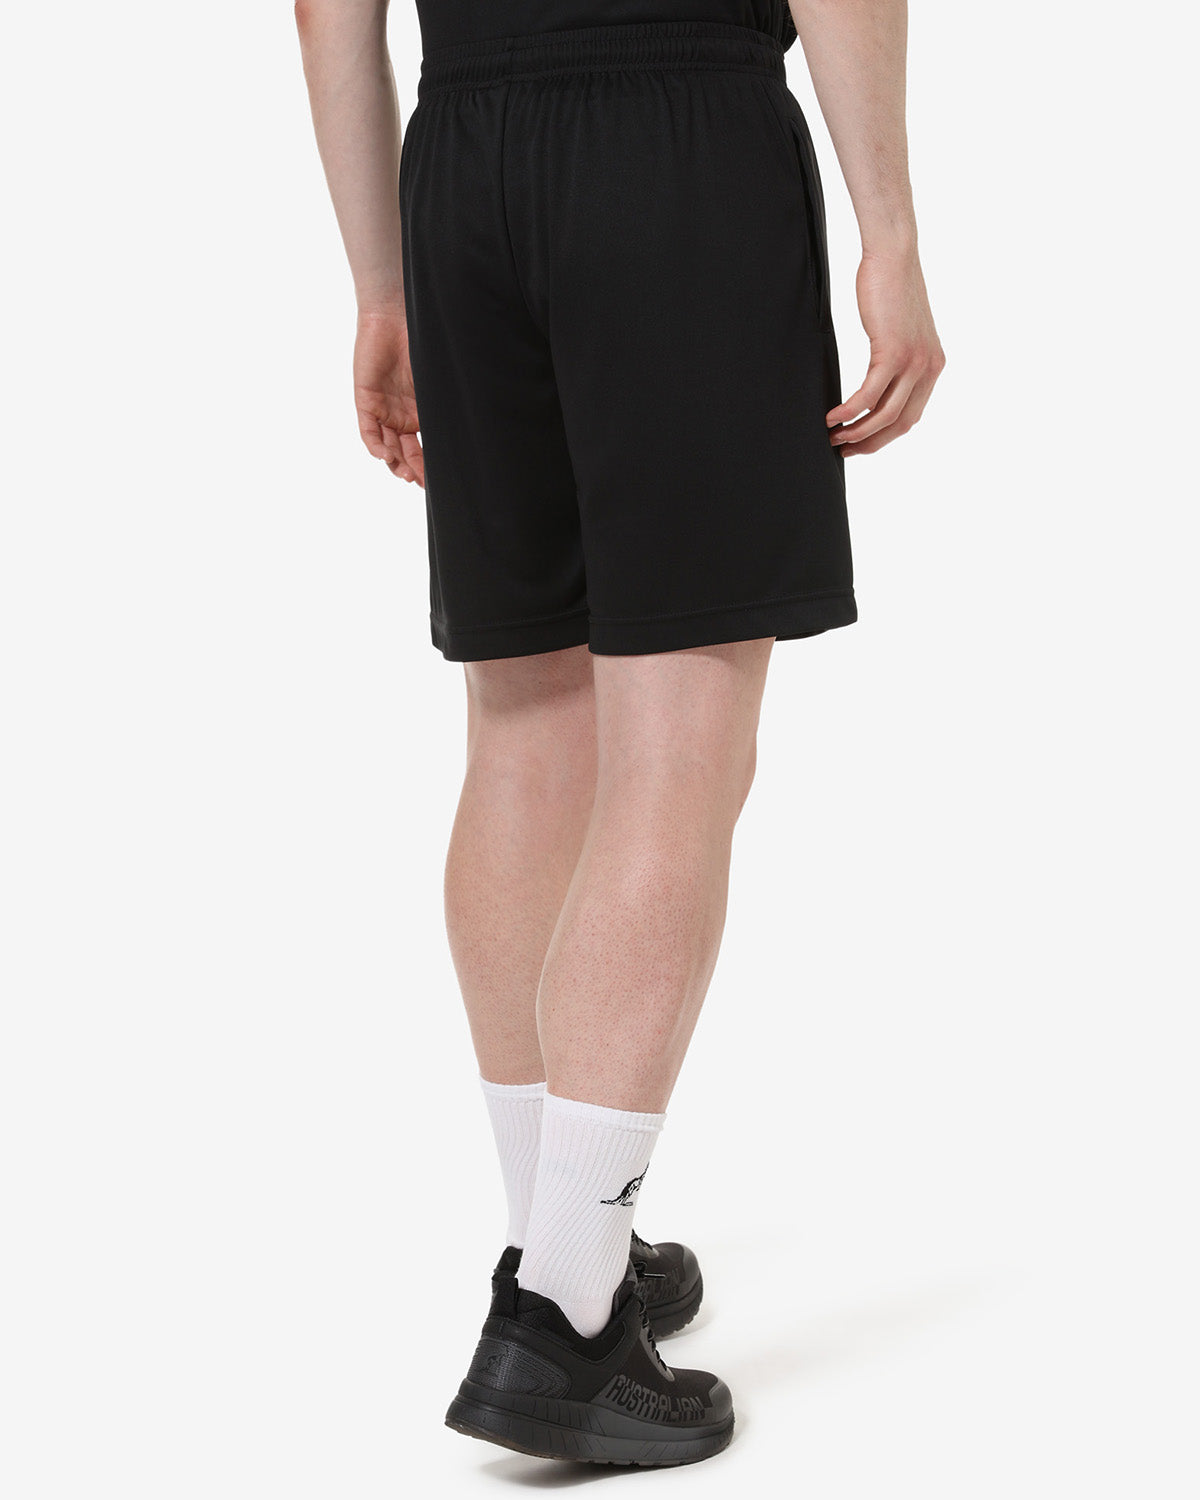 Basic Padel Shorts: Australian Padel